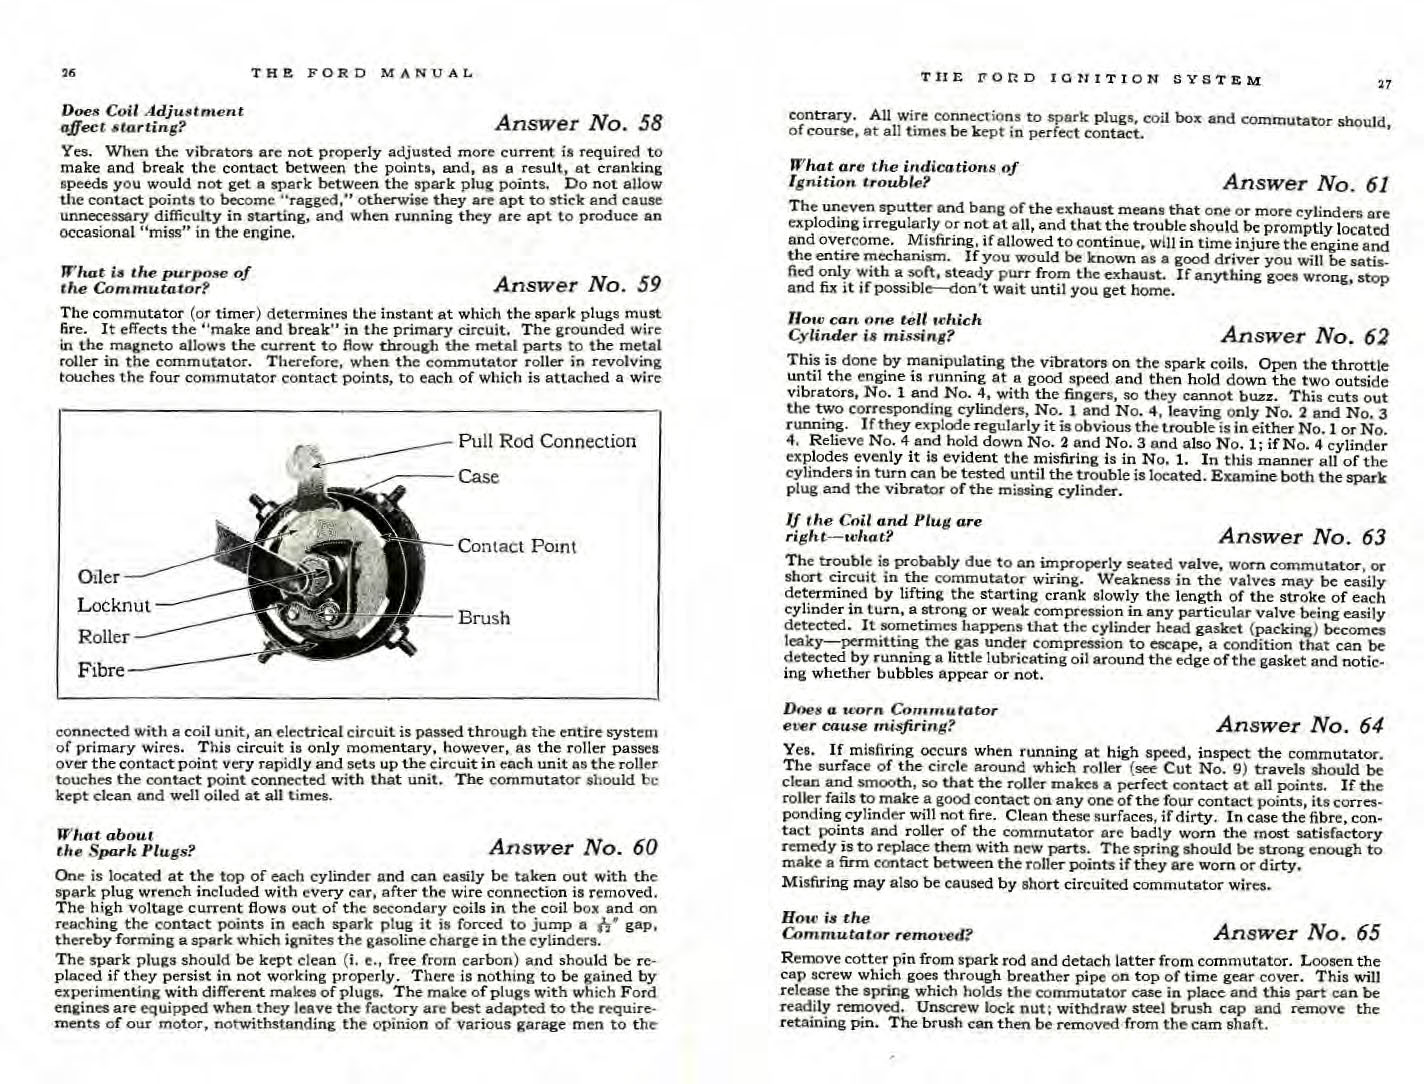 n_1922 Ford Manual-26-27.jpg